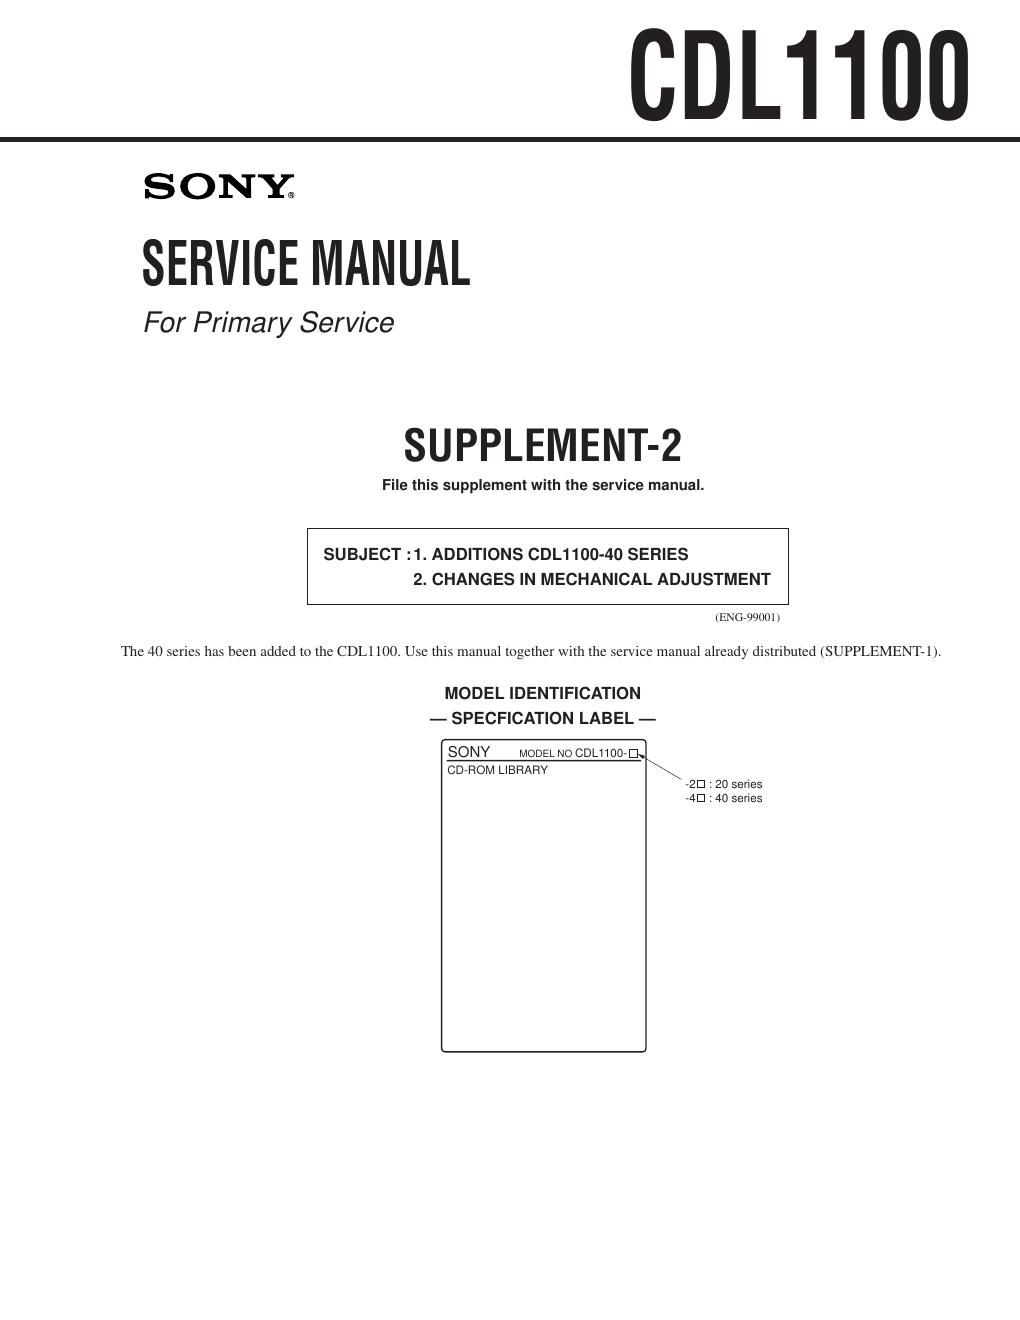 sony cdl 1100 service manual